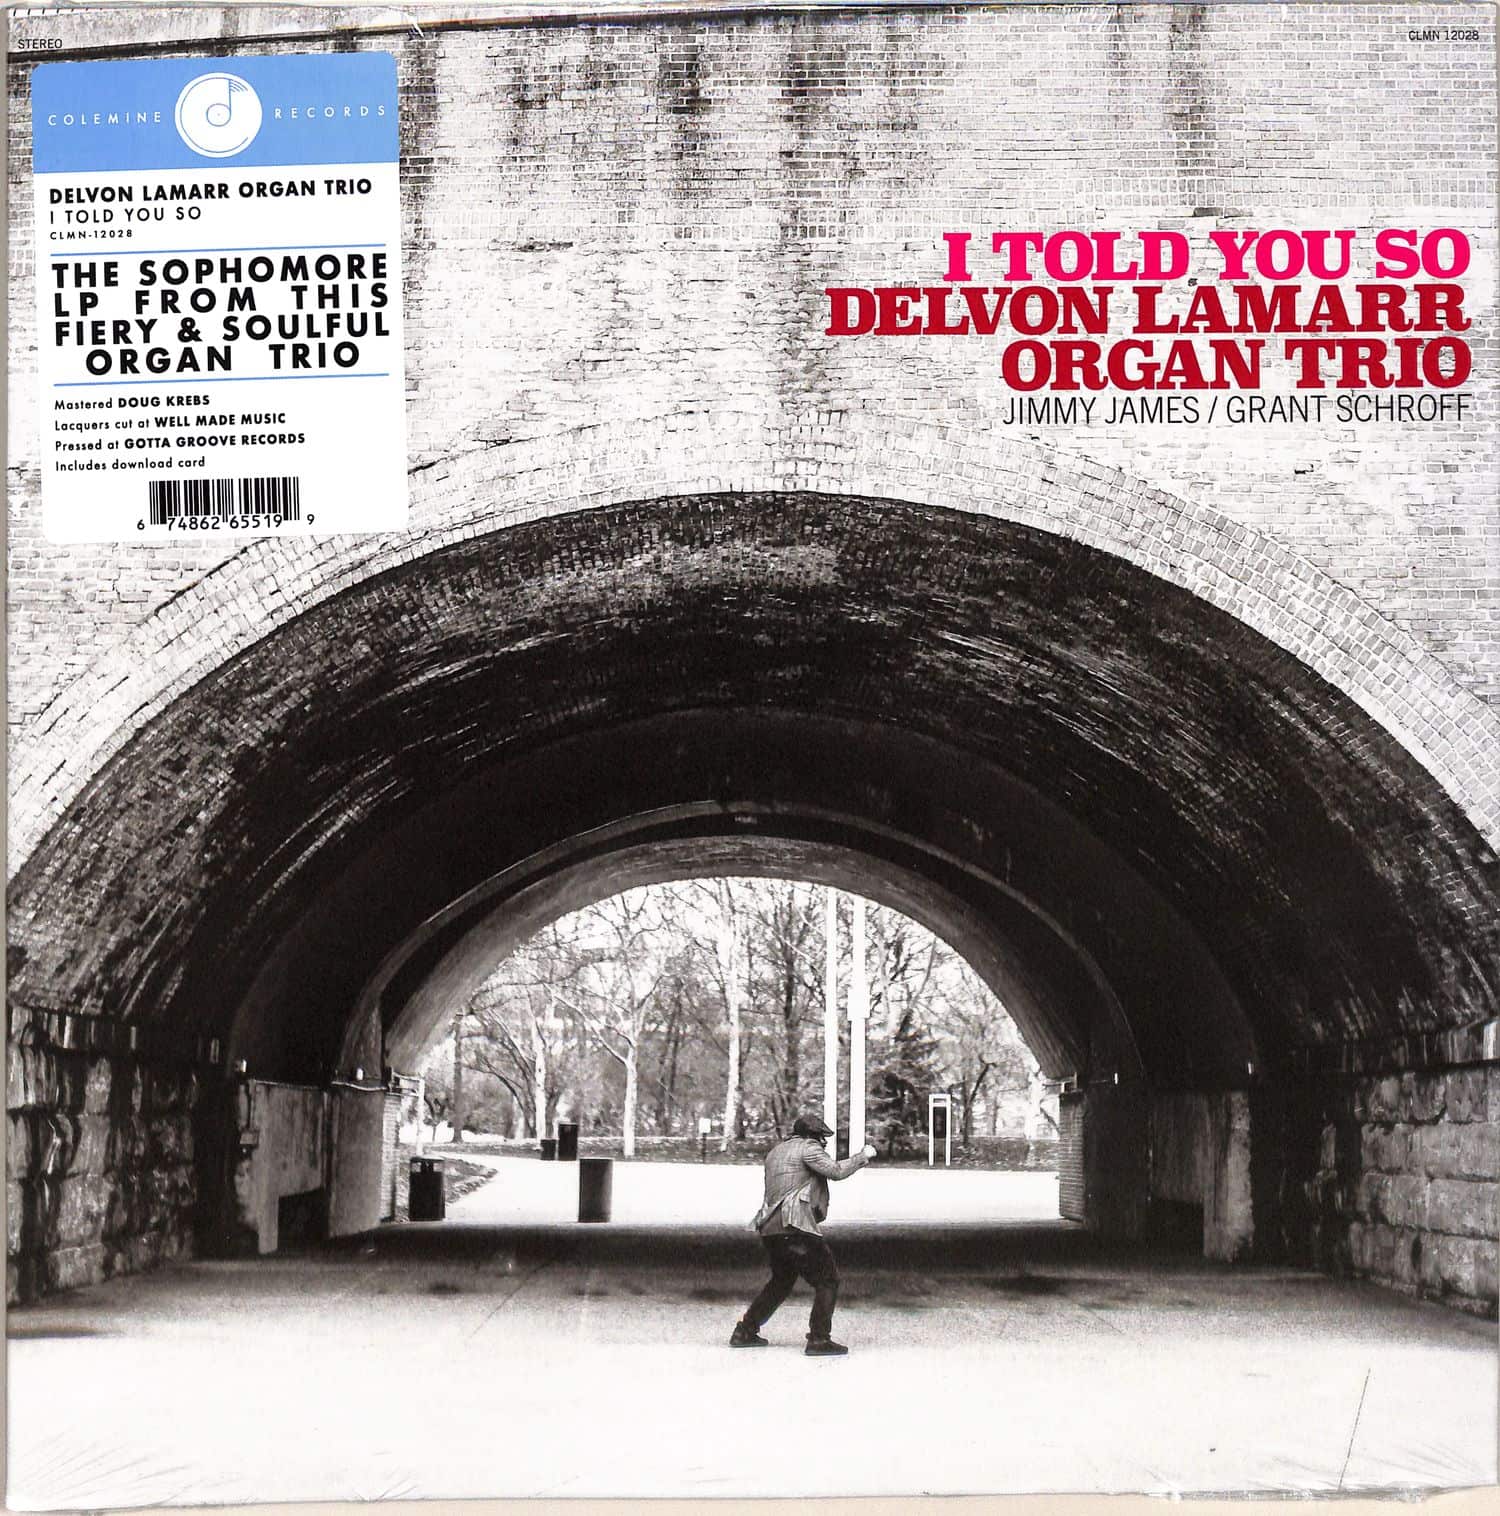 Delvon Lamarr Organ Trio - I TOLD YOU SO 